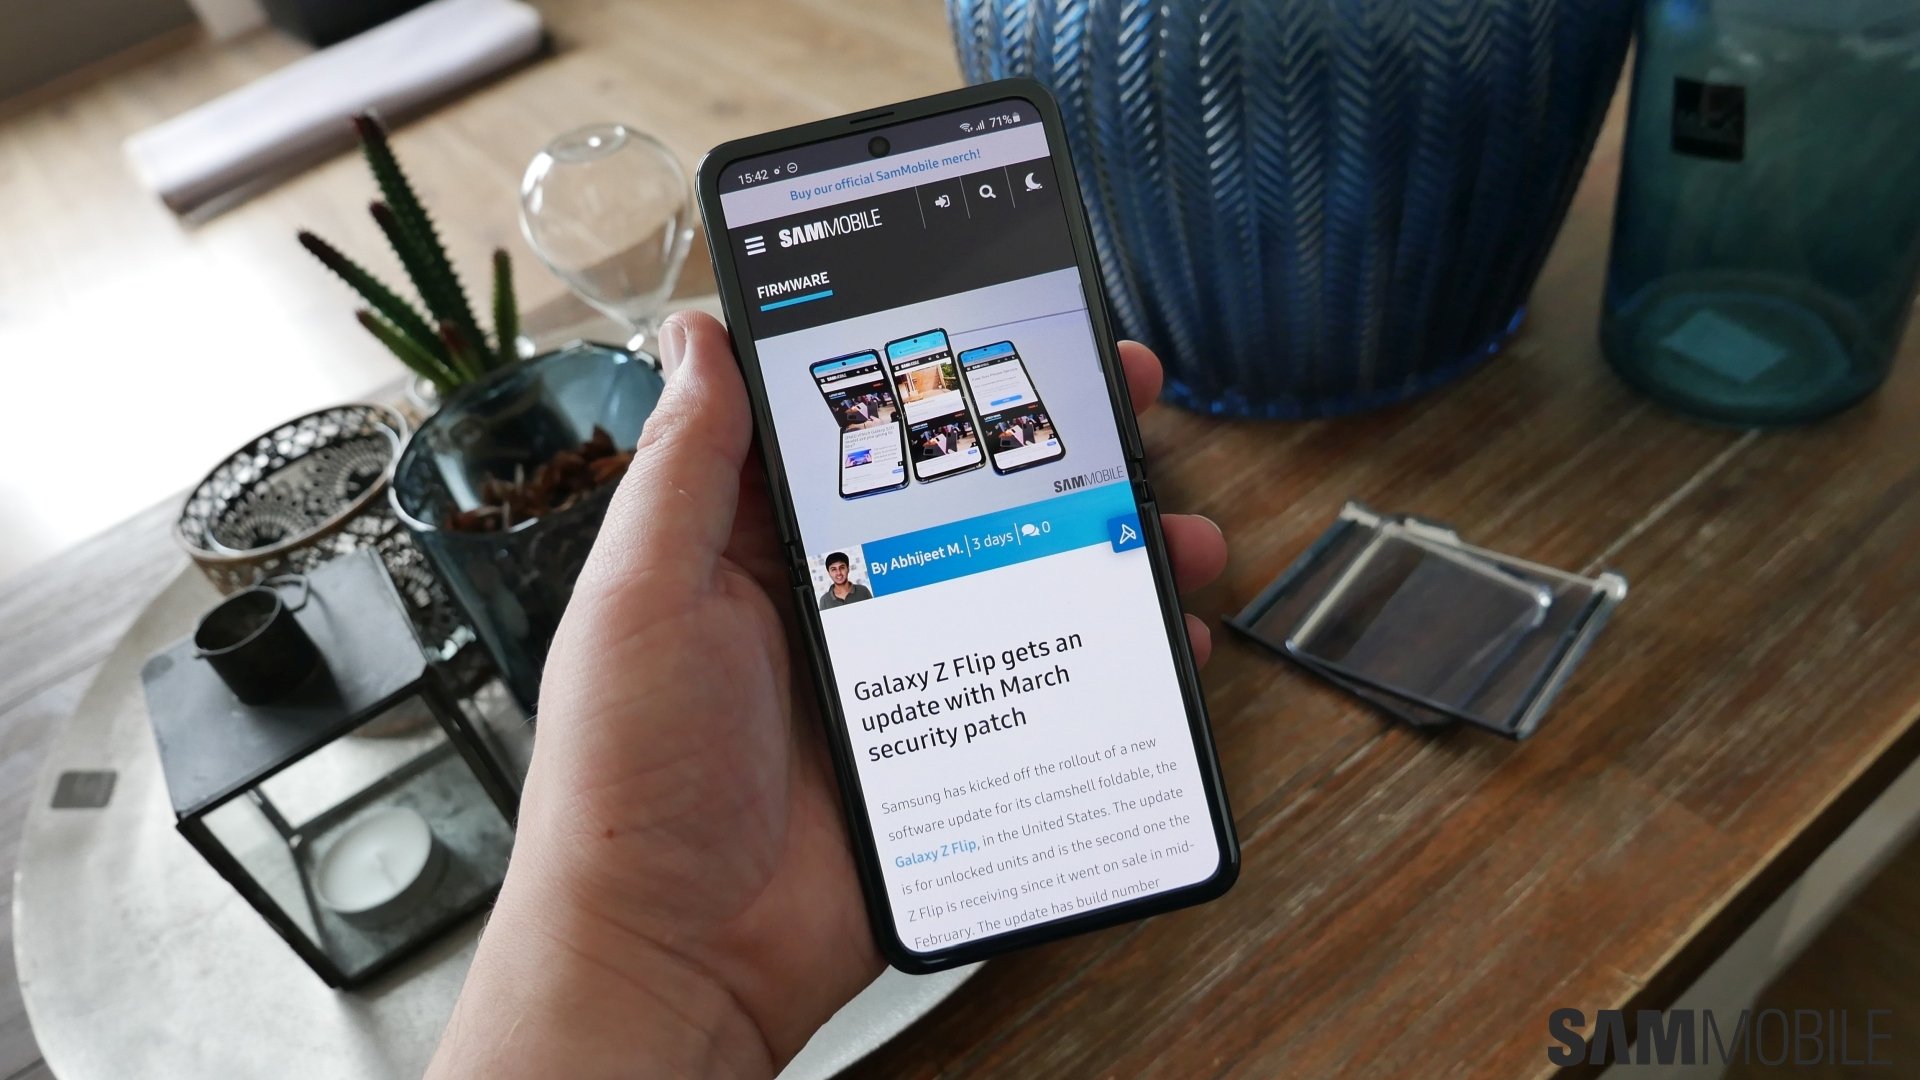 Samsung Galaxy Z Flip review: Admire it, don't buy it